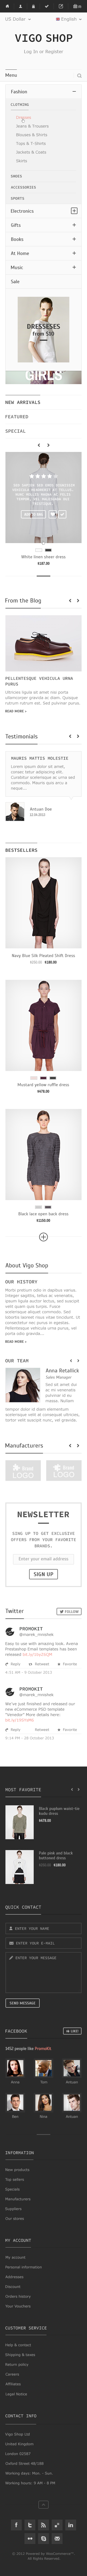 Vigo Shop - Responsive Bootstrap eCommerce PSD